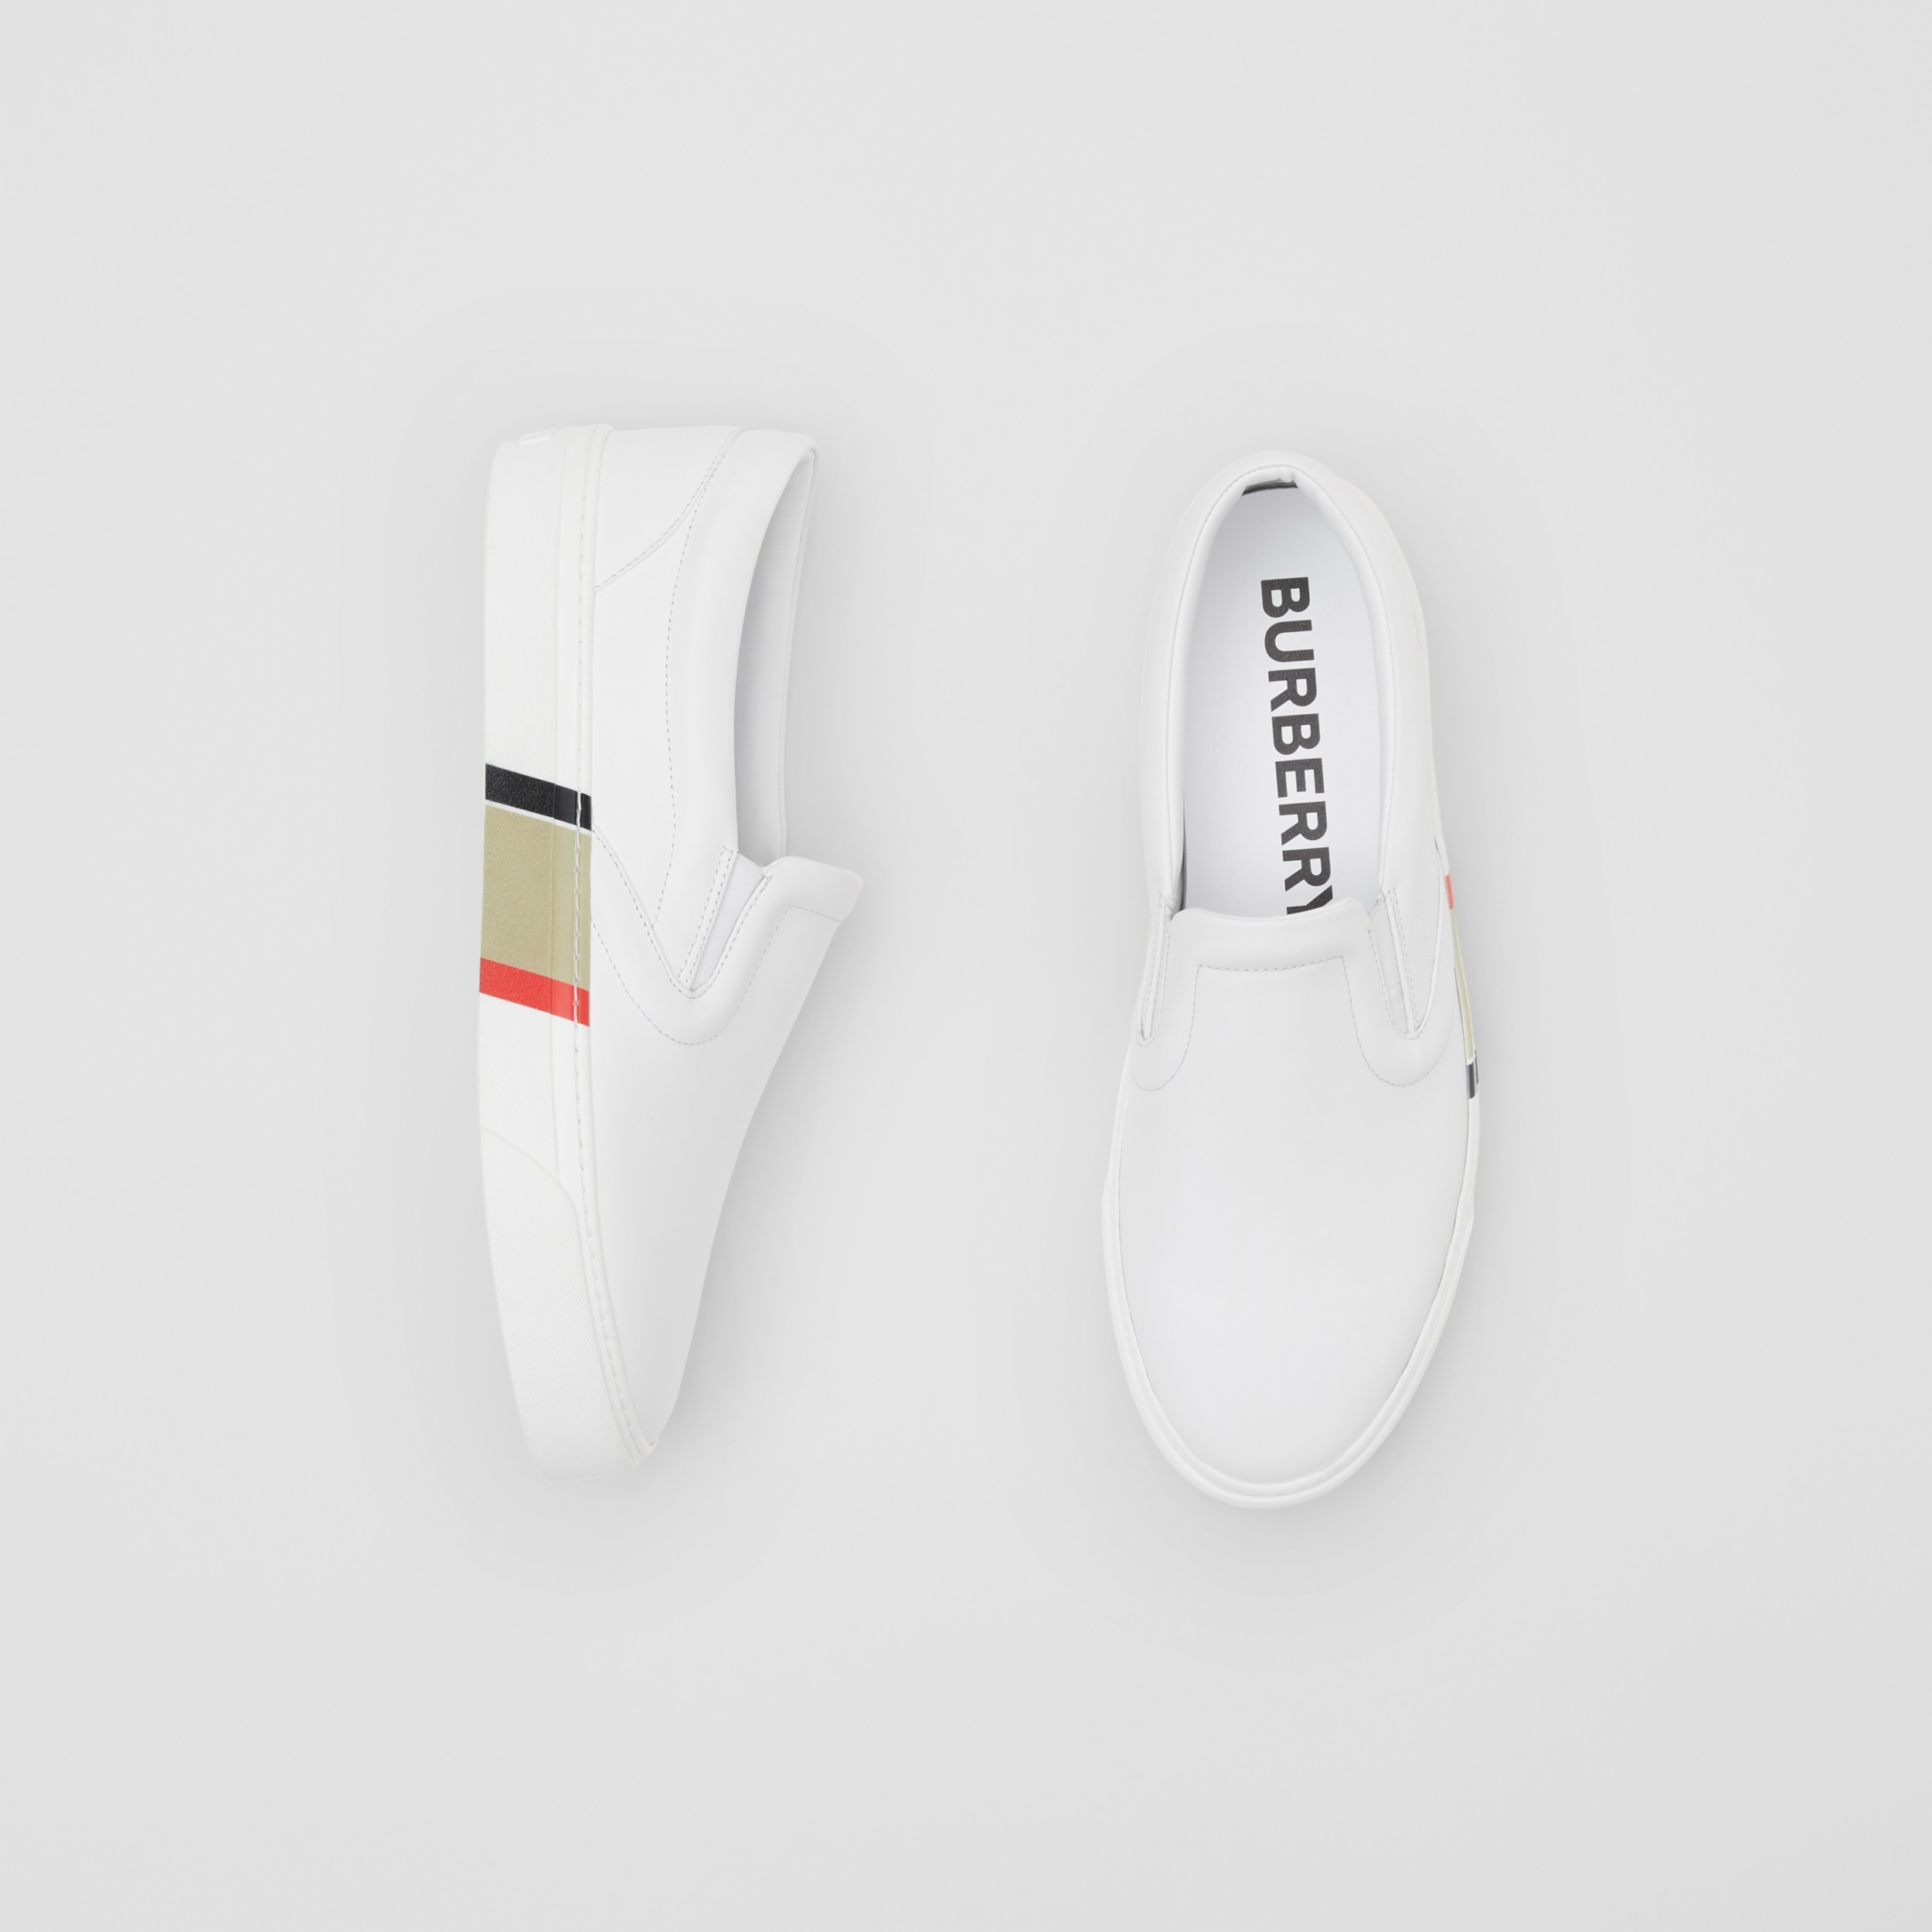 George Stevenson Støt hovedpine Bio-based Sole Leather Slip-on Sneakers in Optic White - Men | Burberry